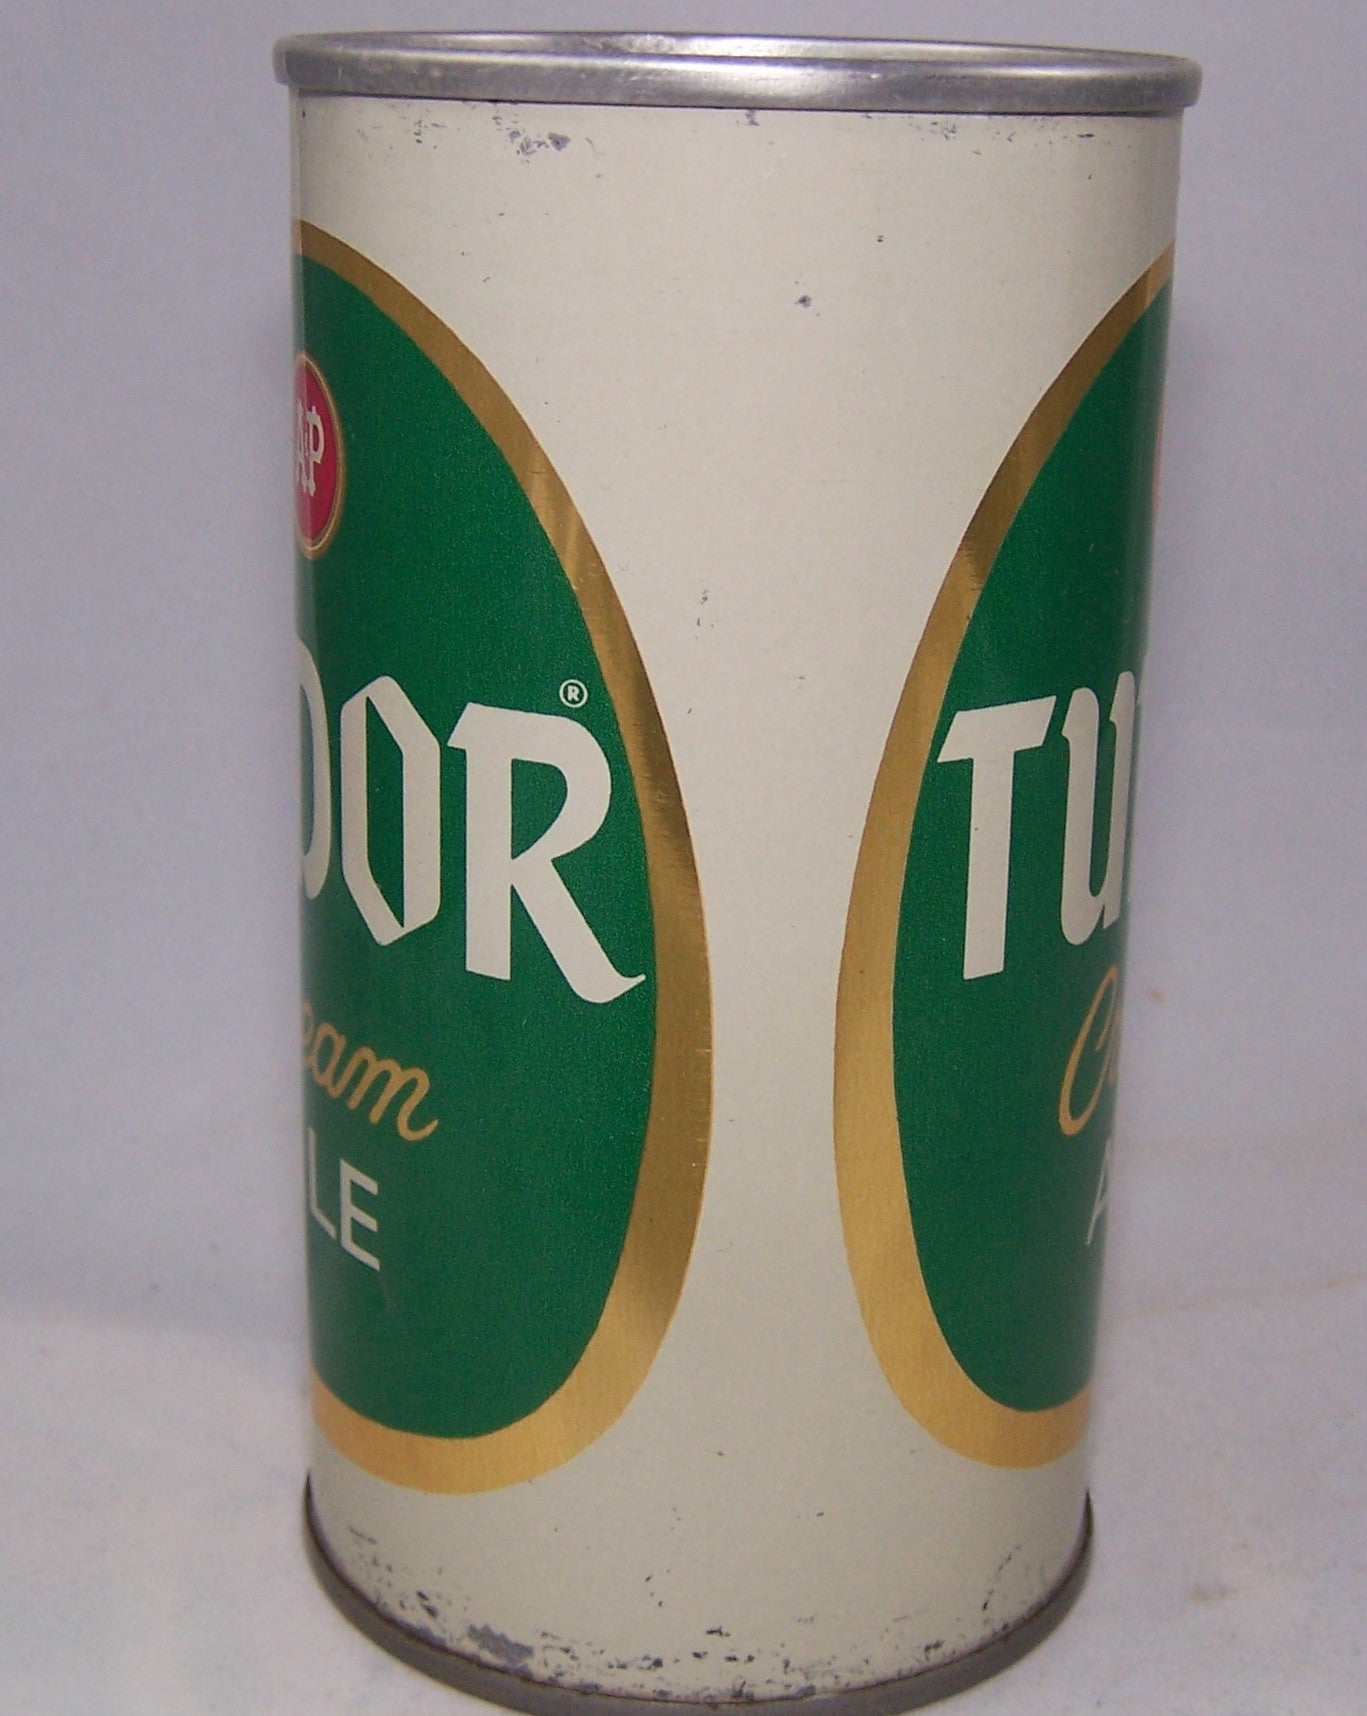 Tudor Cream Ale, USBC II 131-18, Grade 1/1- Sold on 10/15/15